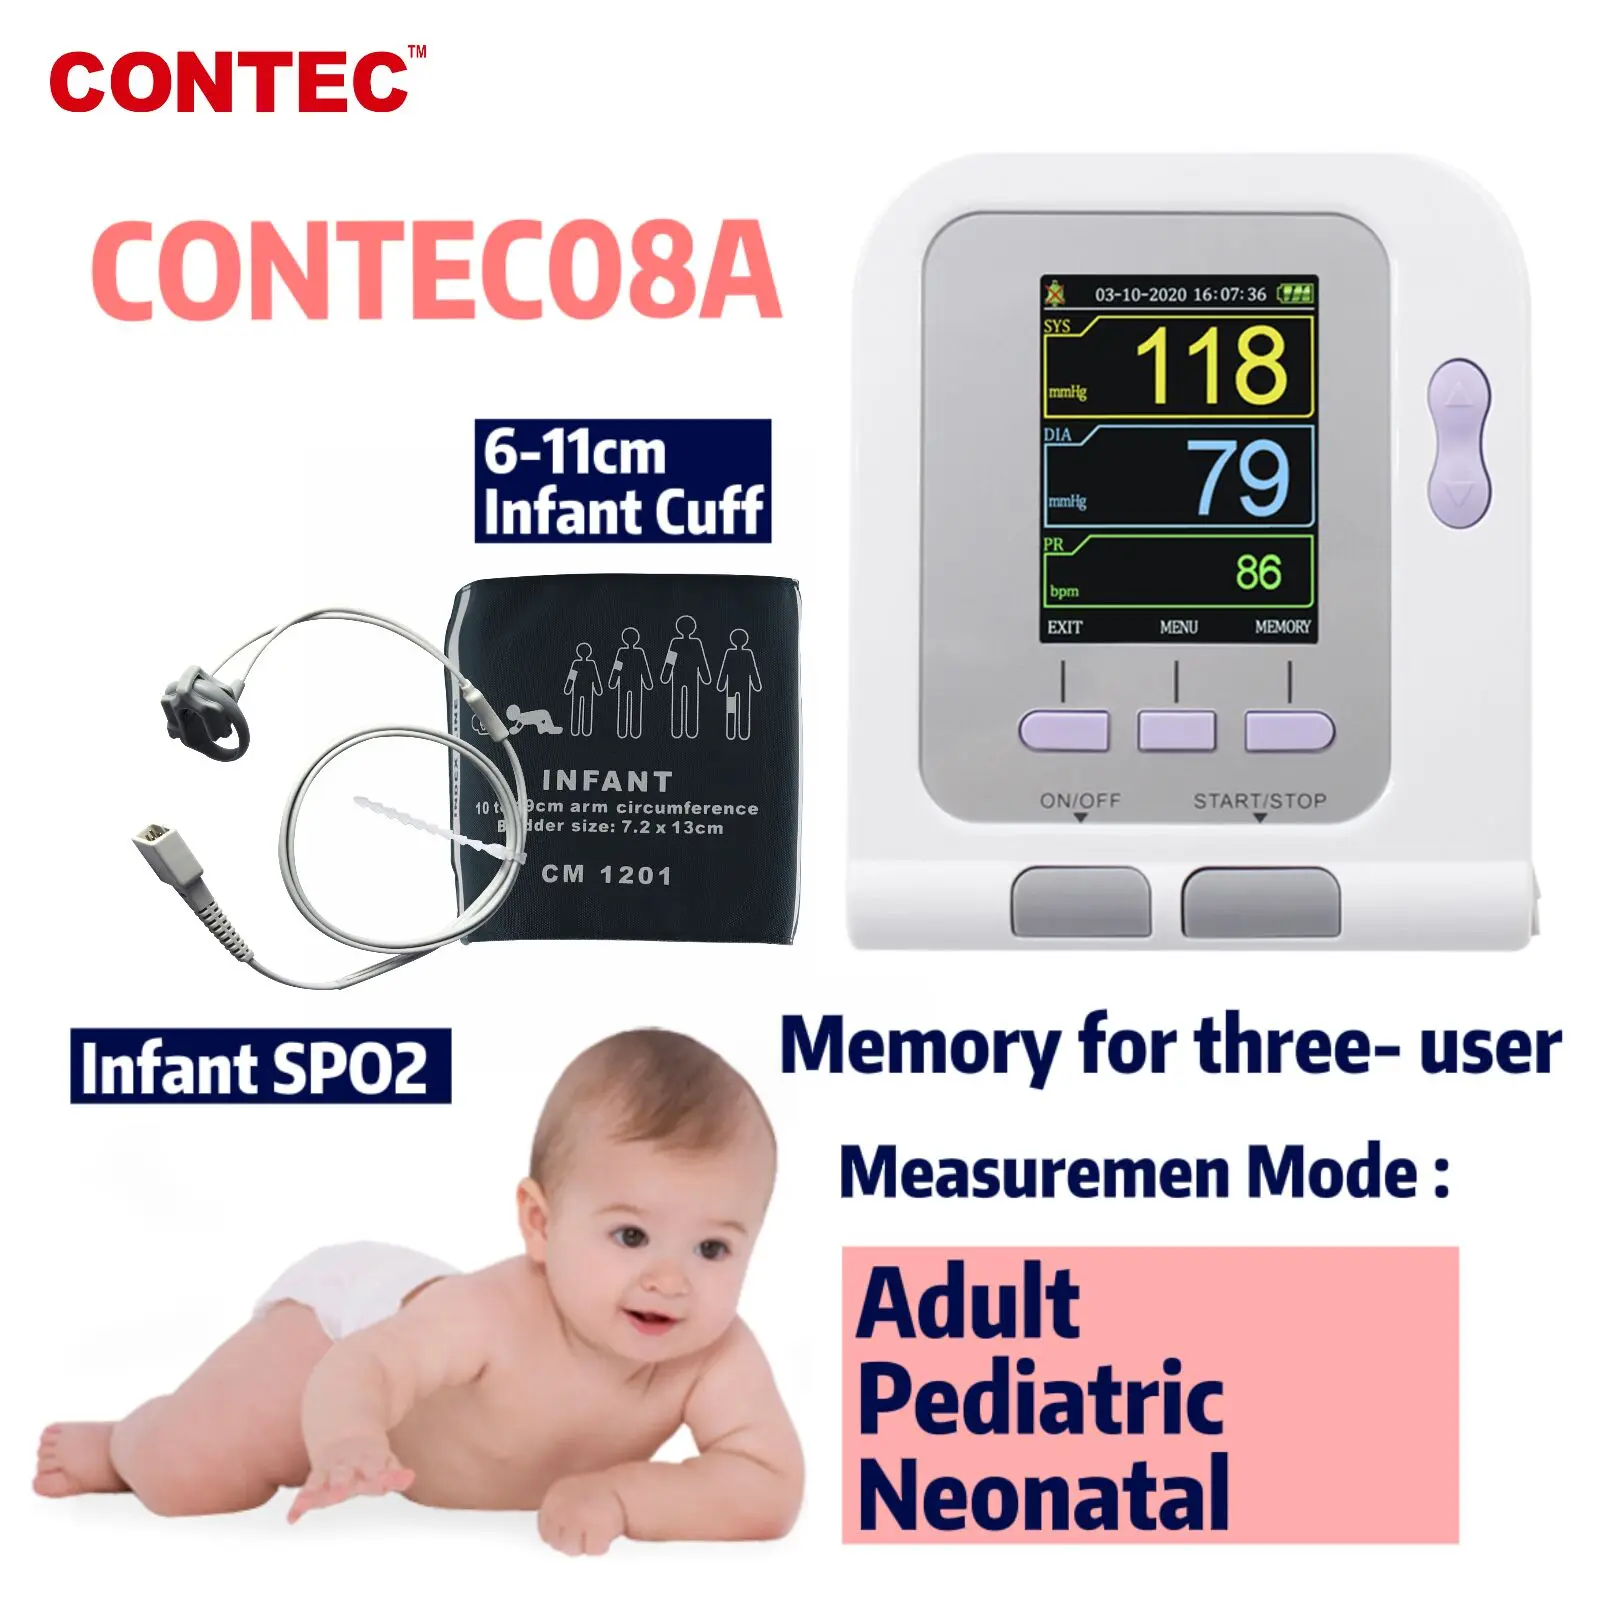 

CONTEC08A Infant Neonatal Digital Blood Pressure Monitor Electronic Sphygmomanmeter NIBP Monitor SpO2 Probe PC Software